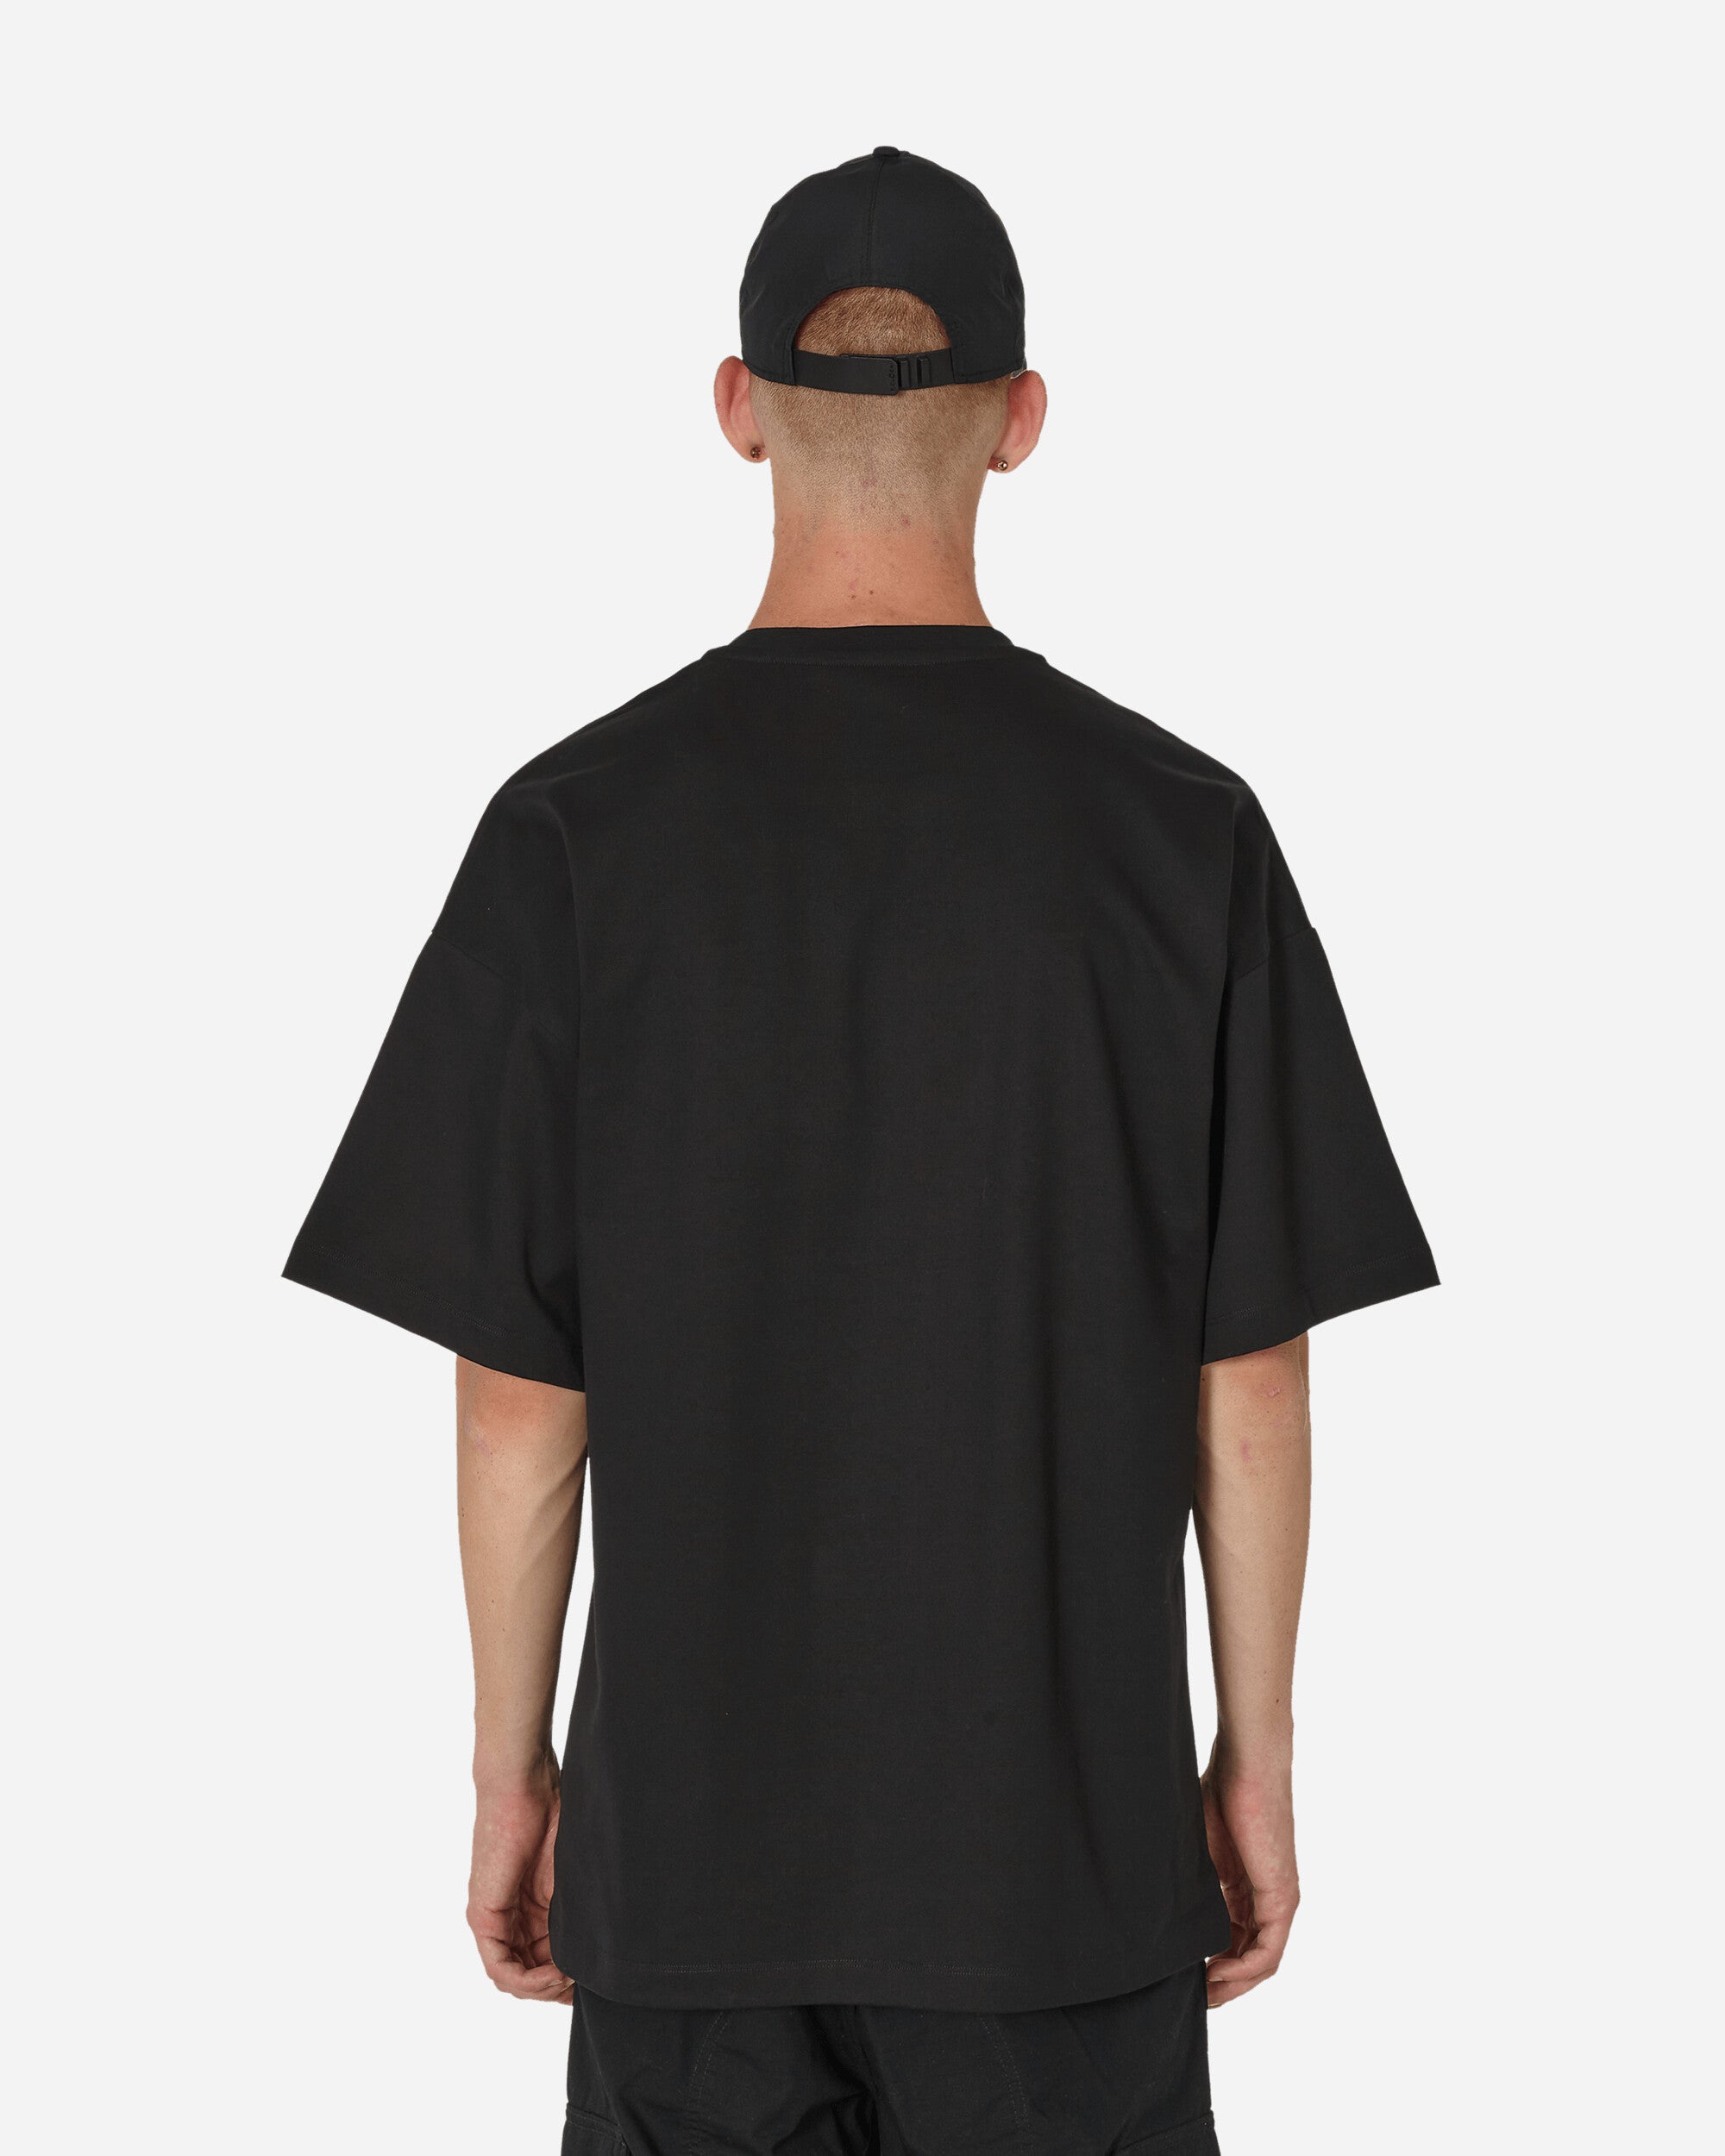 OAMC Rings T-Shirt Black T-Shirts Shortsleeve 23A28OAJ13 001